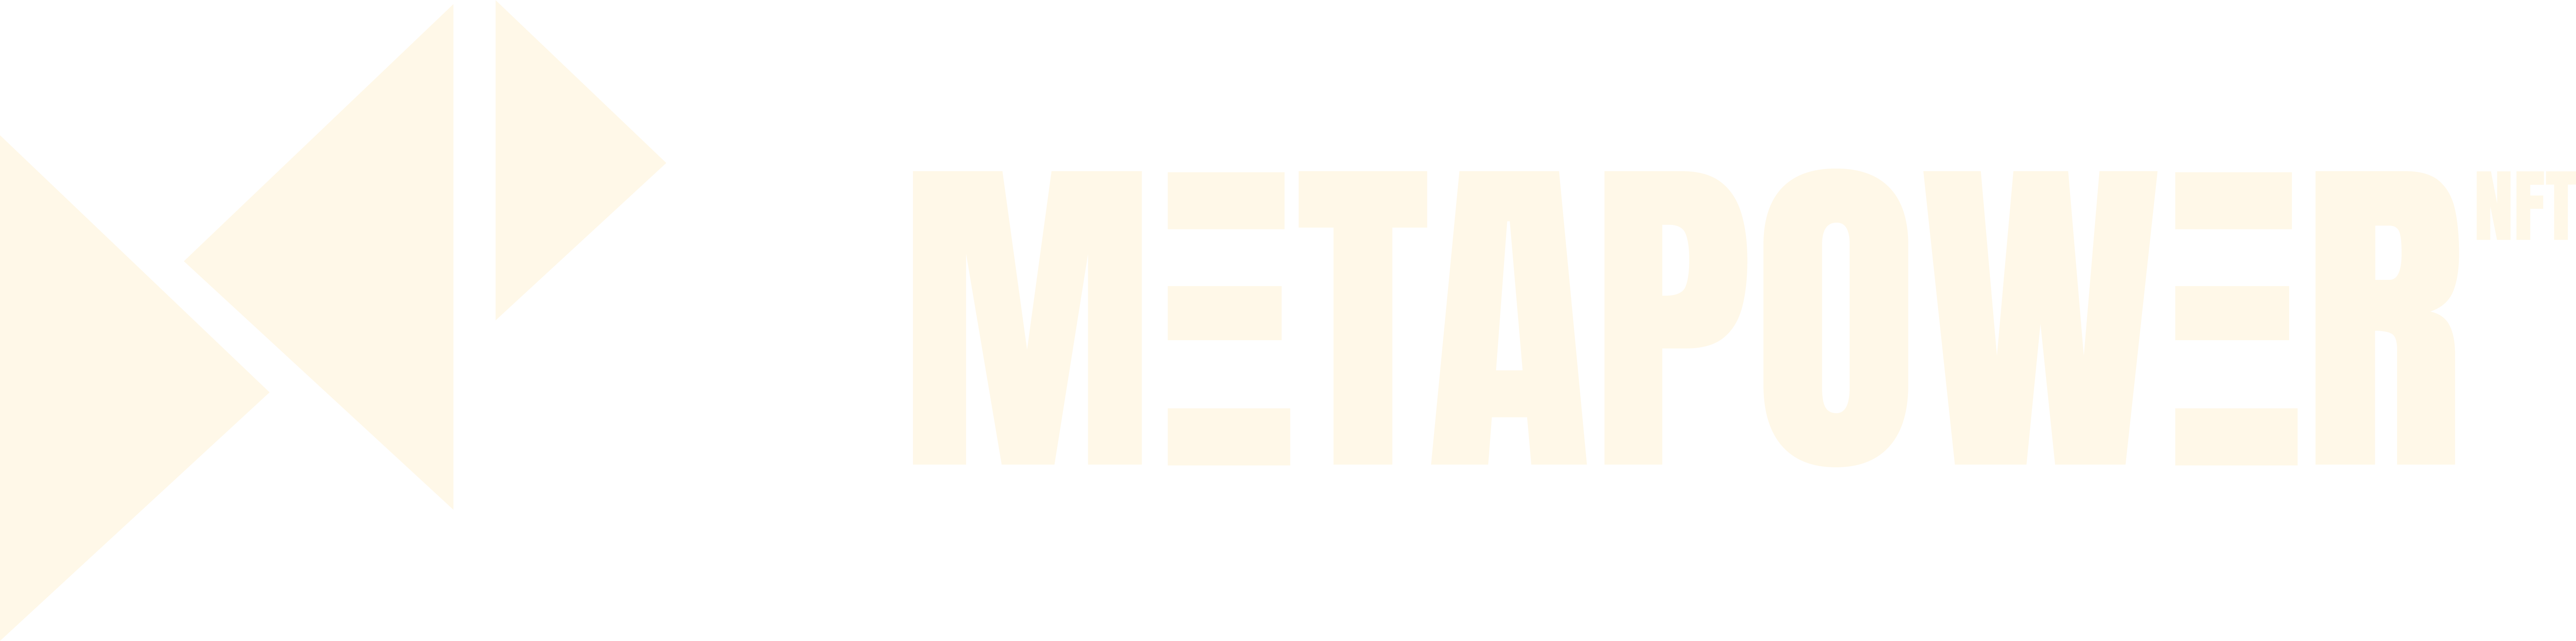 Metapower Logo bright